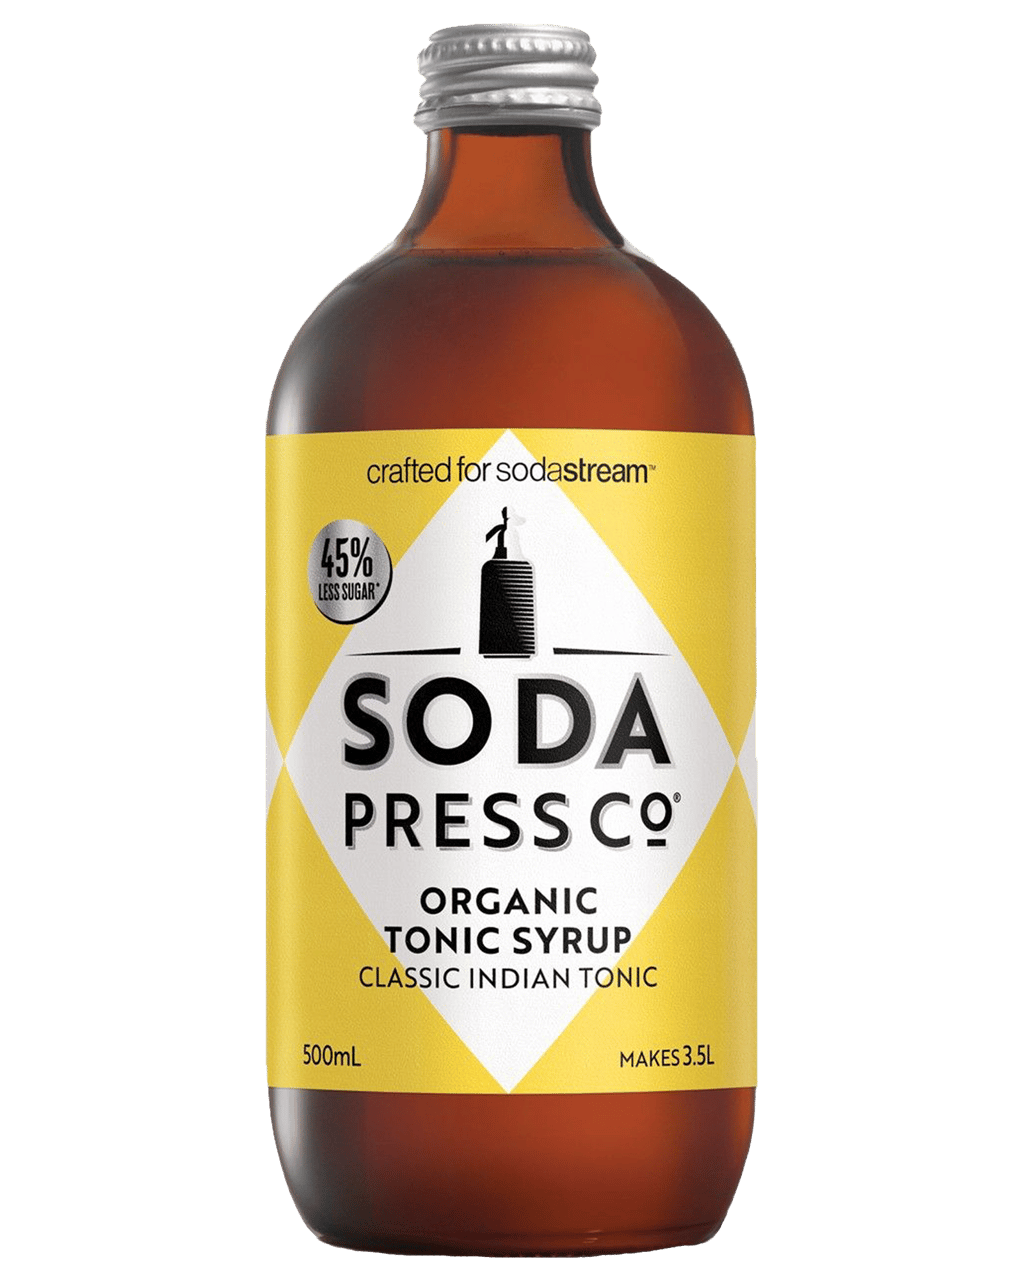 Soda Press Organic Zesty Ginger Kombucha - SodaStream Flavor